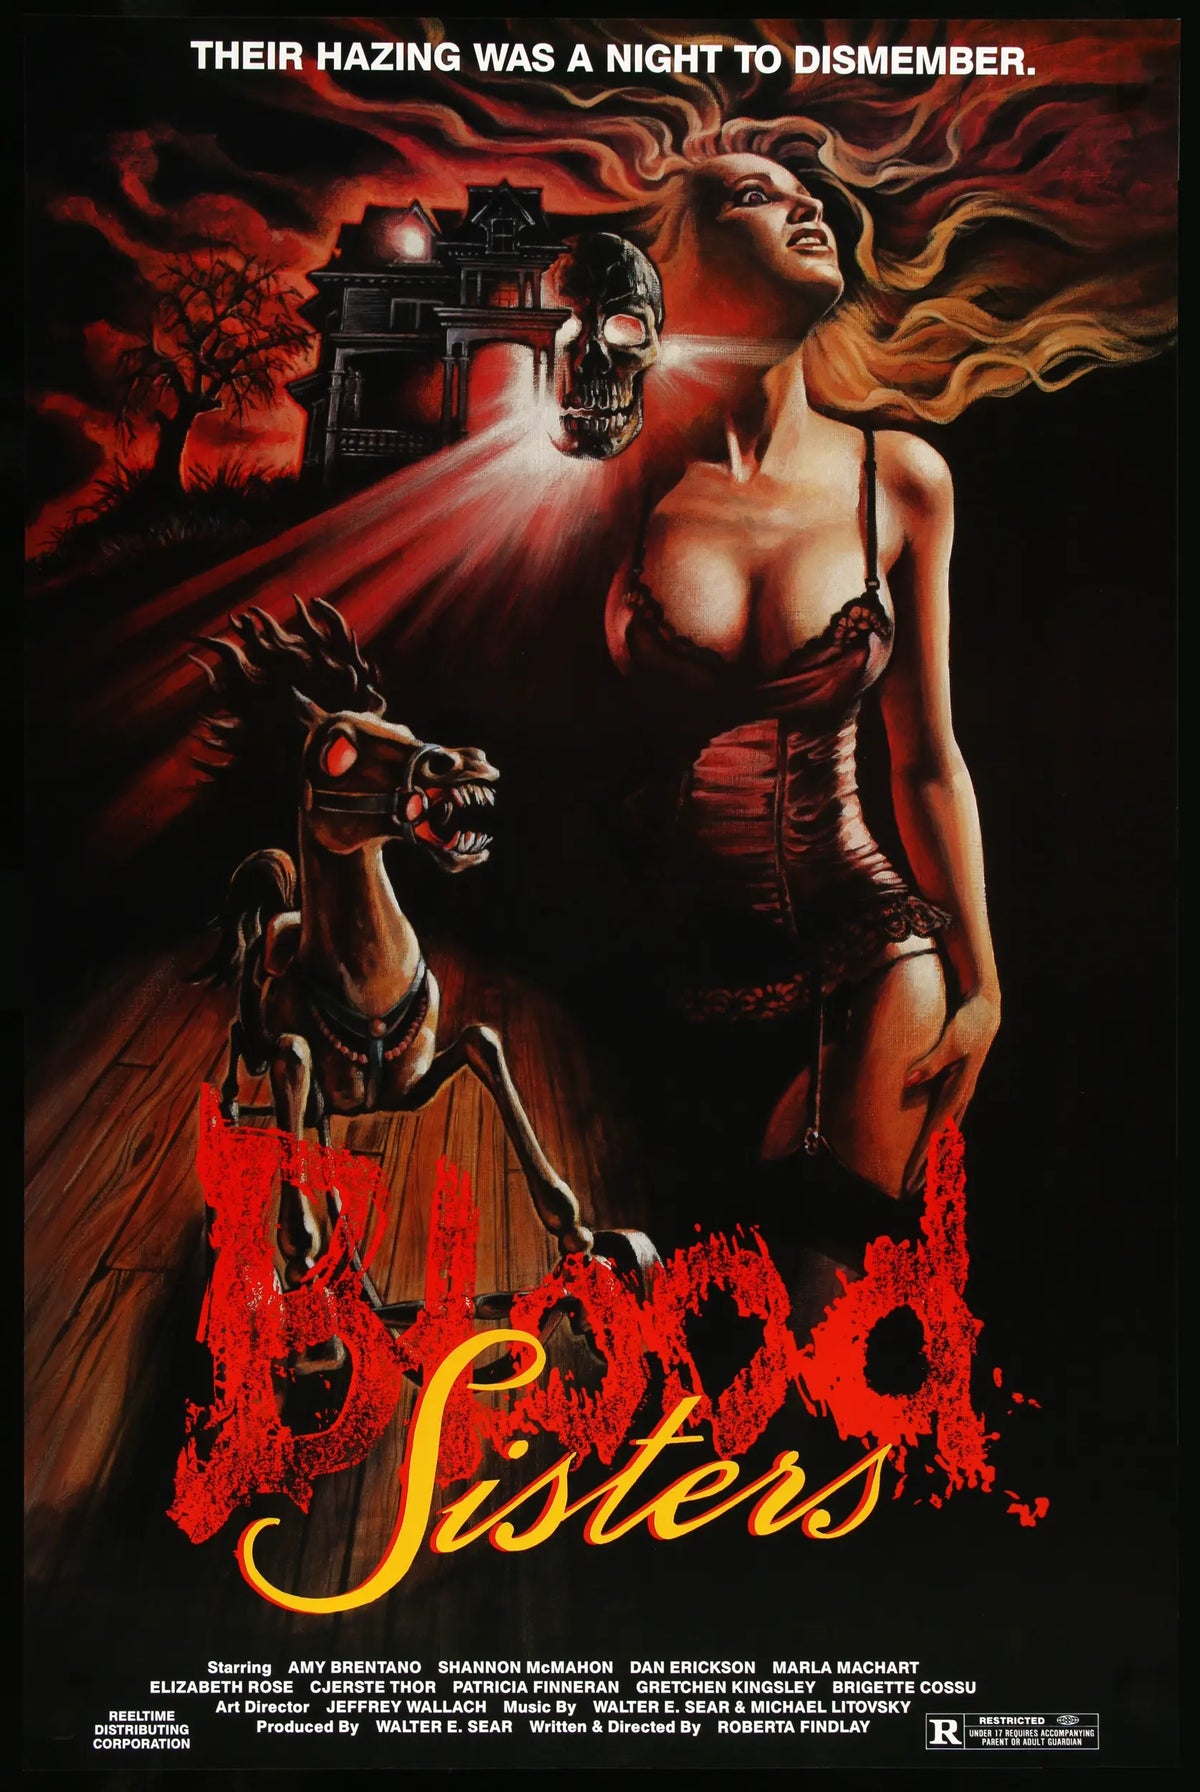 Blood Sisters (1987) original movie poster for sale at Original Film Art